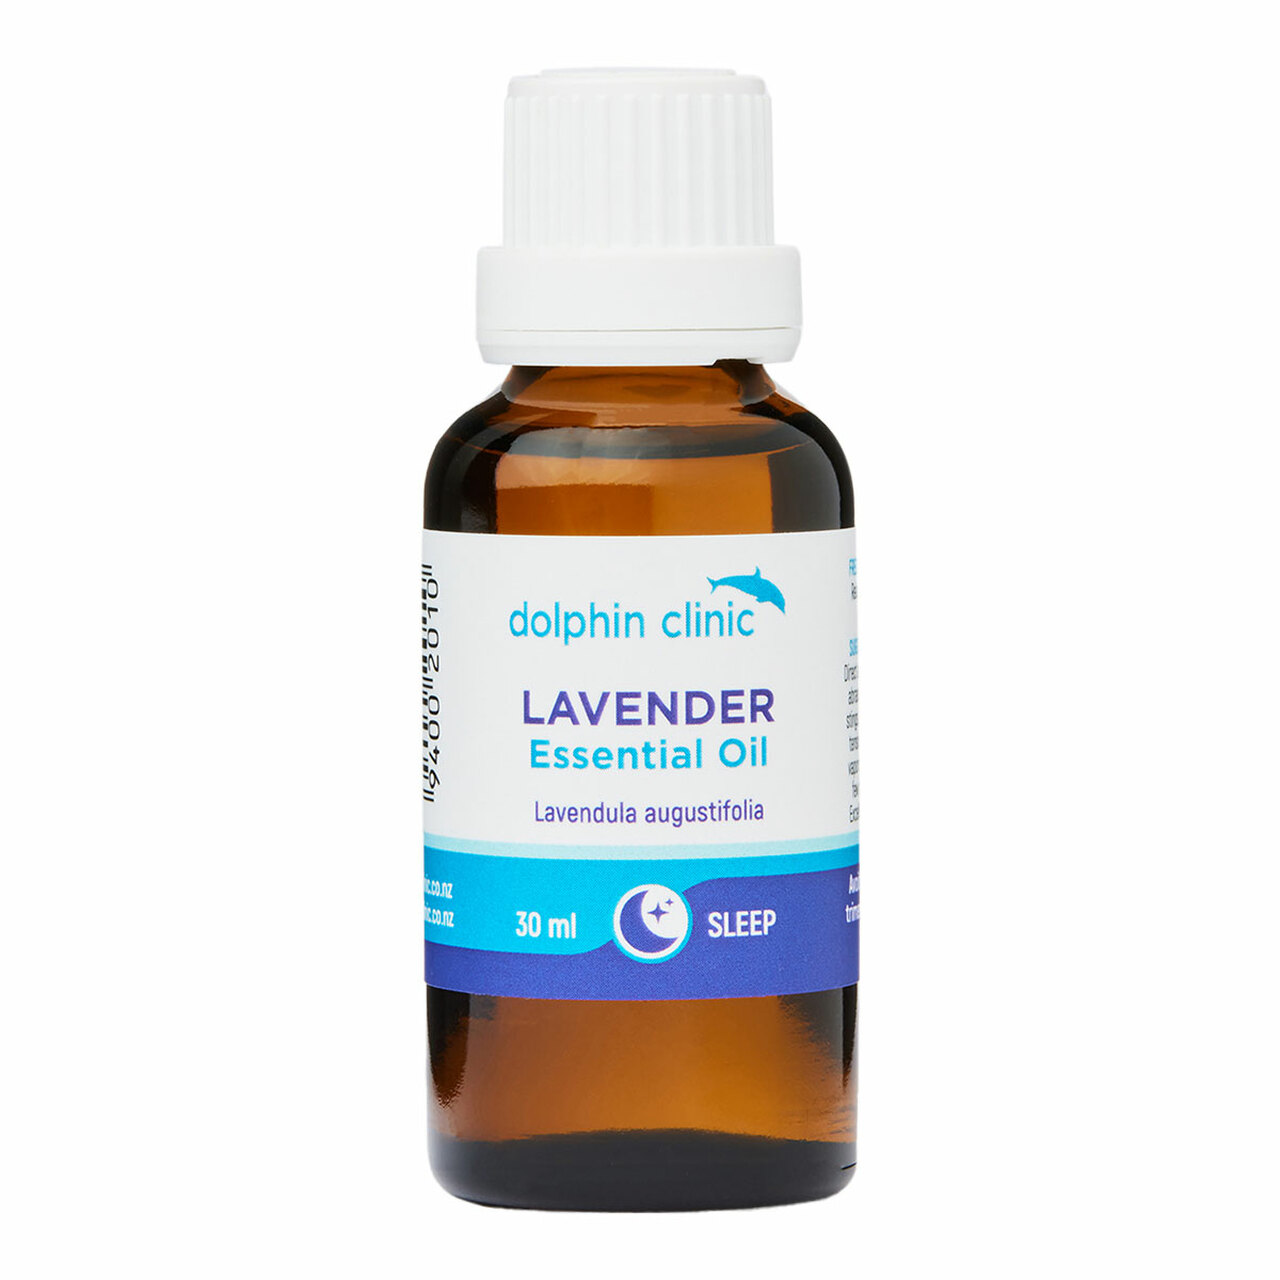 Dolphin Clinic Lavender Oil 30ml